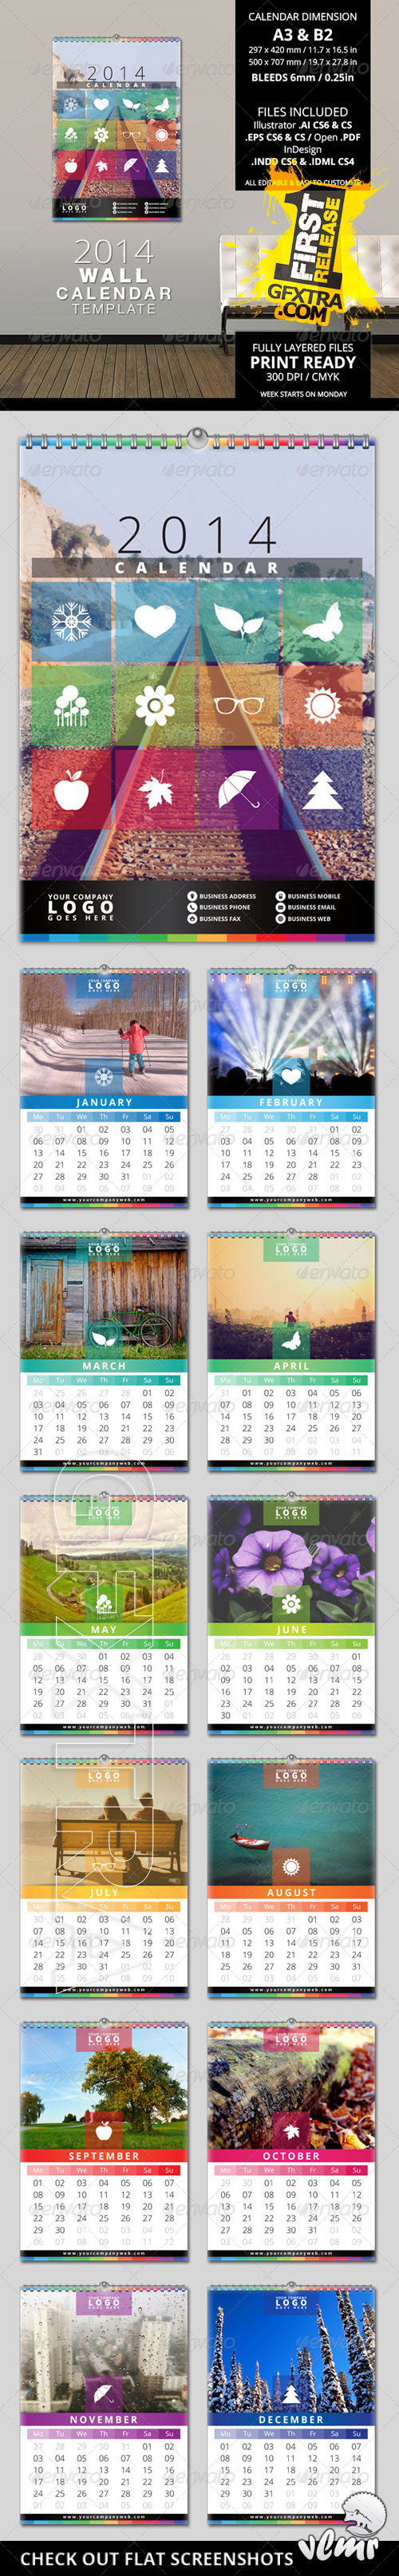 GraphicRiver - 2014 Wall Calendar Template